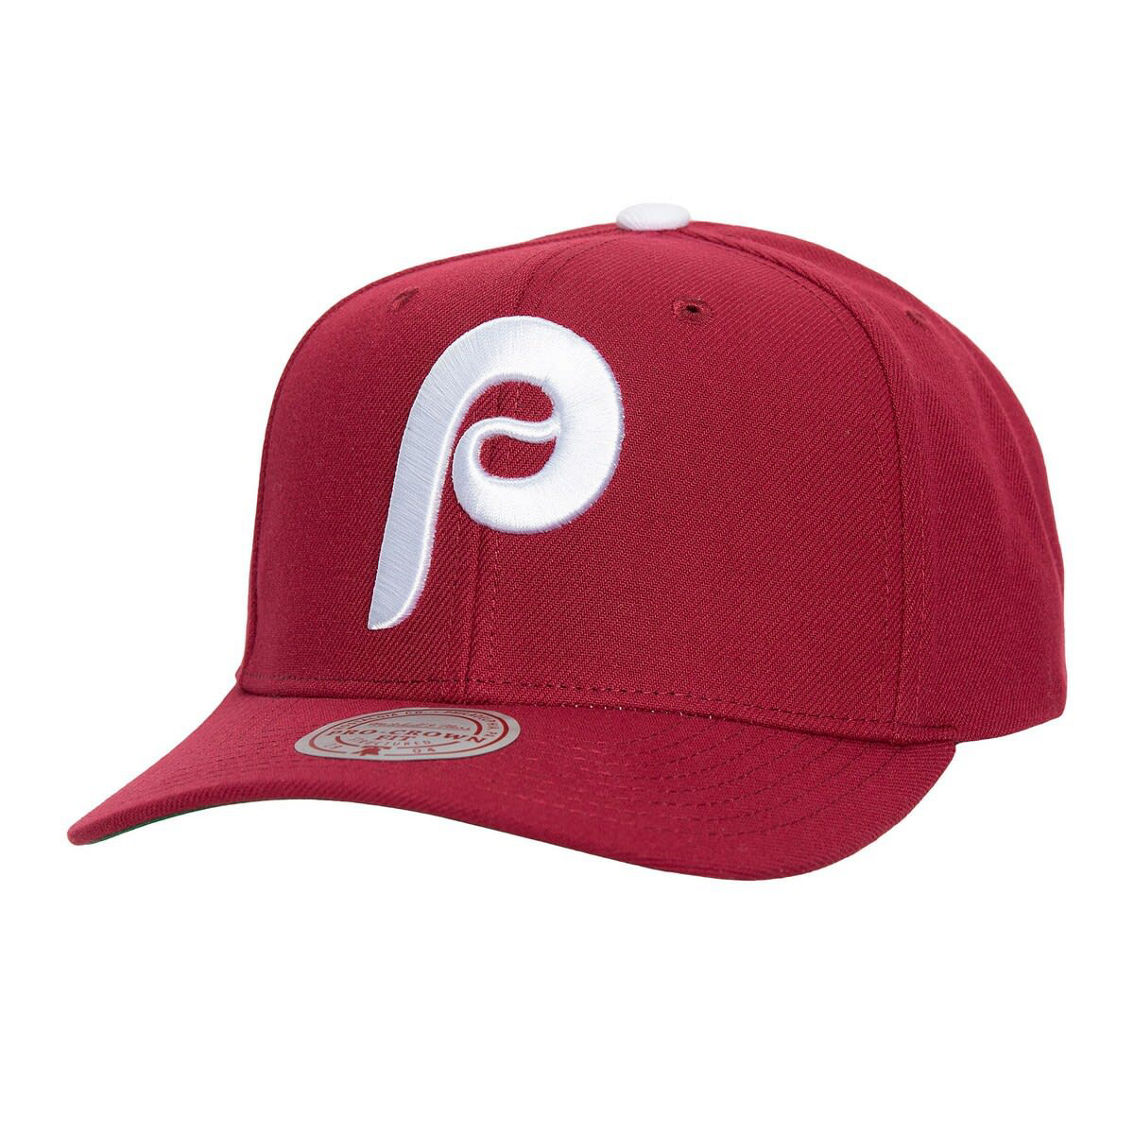 Mitchell & Ness Men's Burgundy Philadelphia Phillies Team Pro Snapback Hat - Image 2 of 4